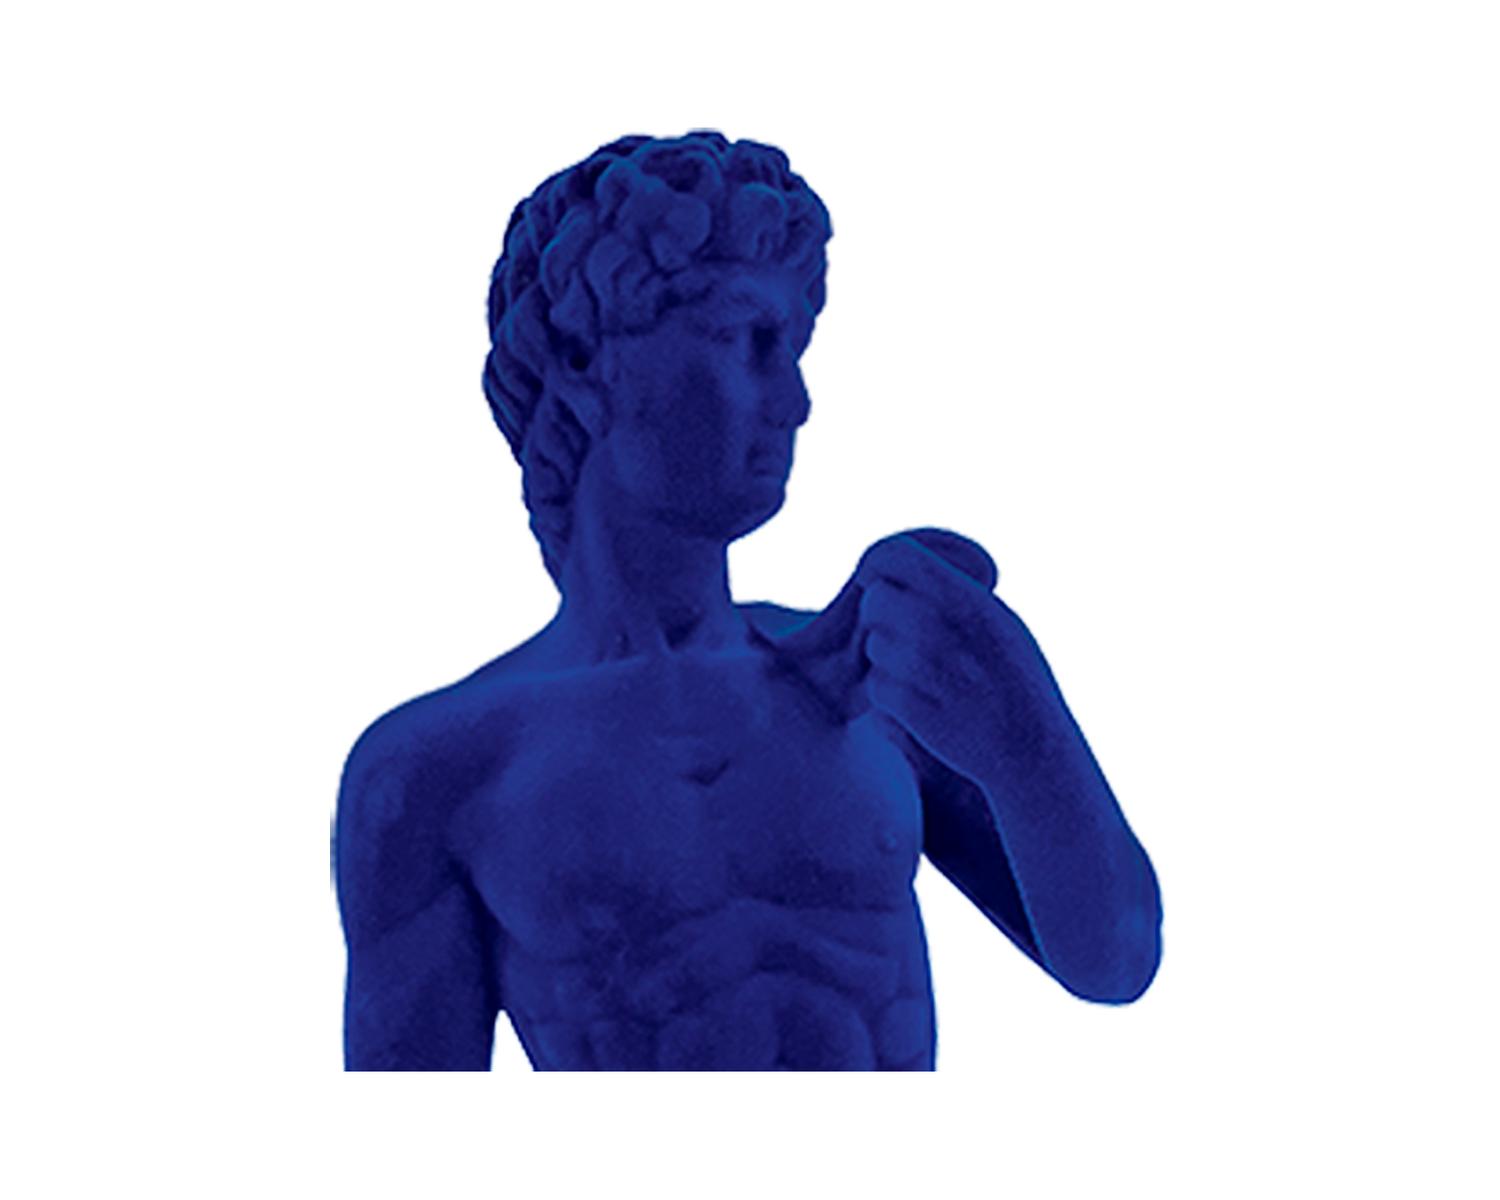 Escultura de David con acabado de Terciopelo